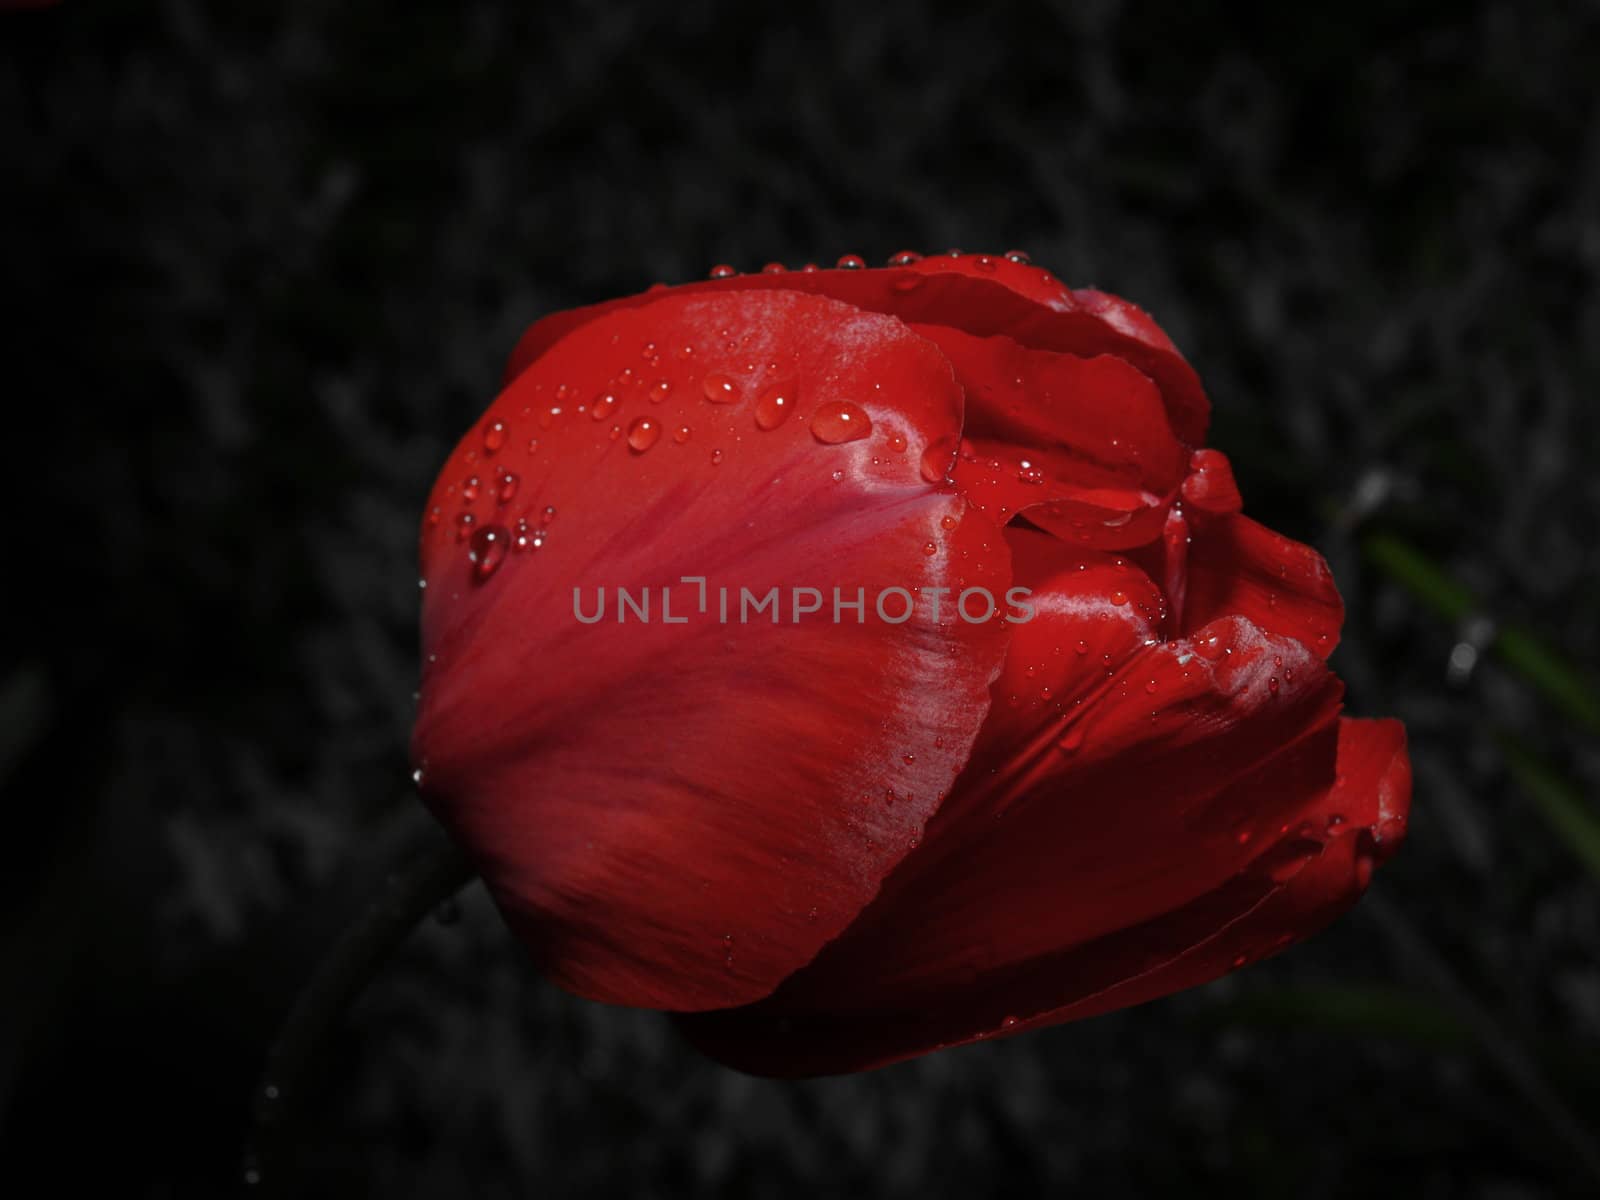 Raindrops on a tulip bulb